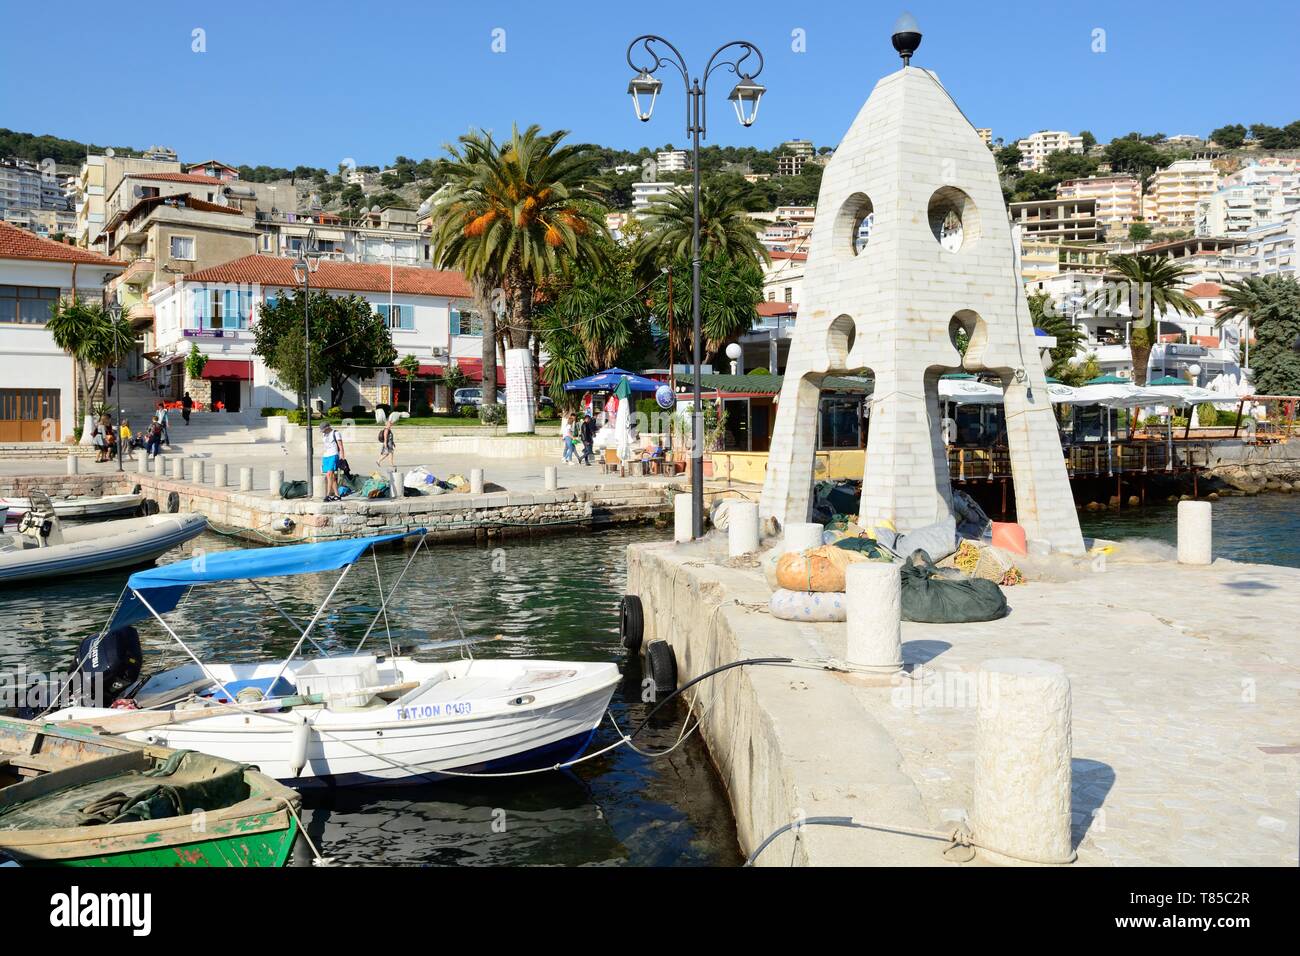 Small harbour at the popular holiday destination of Saranda Albania Stock Photo